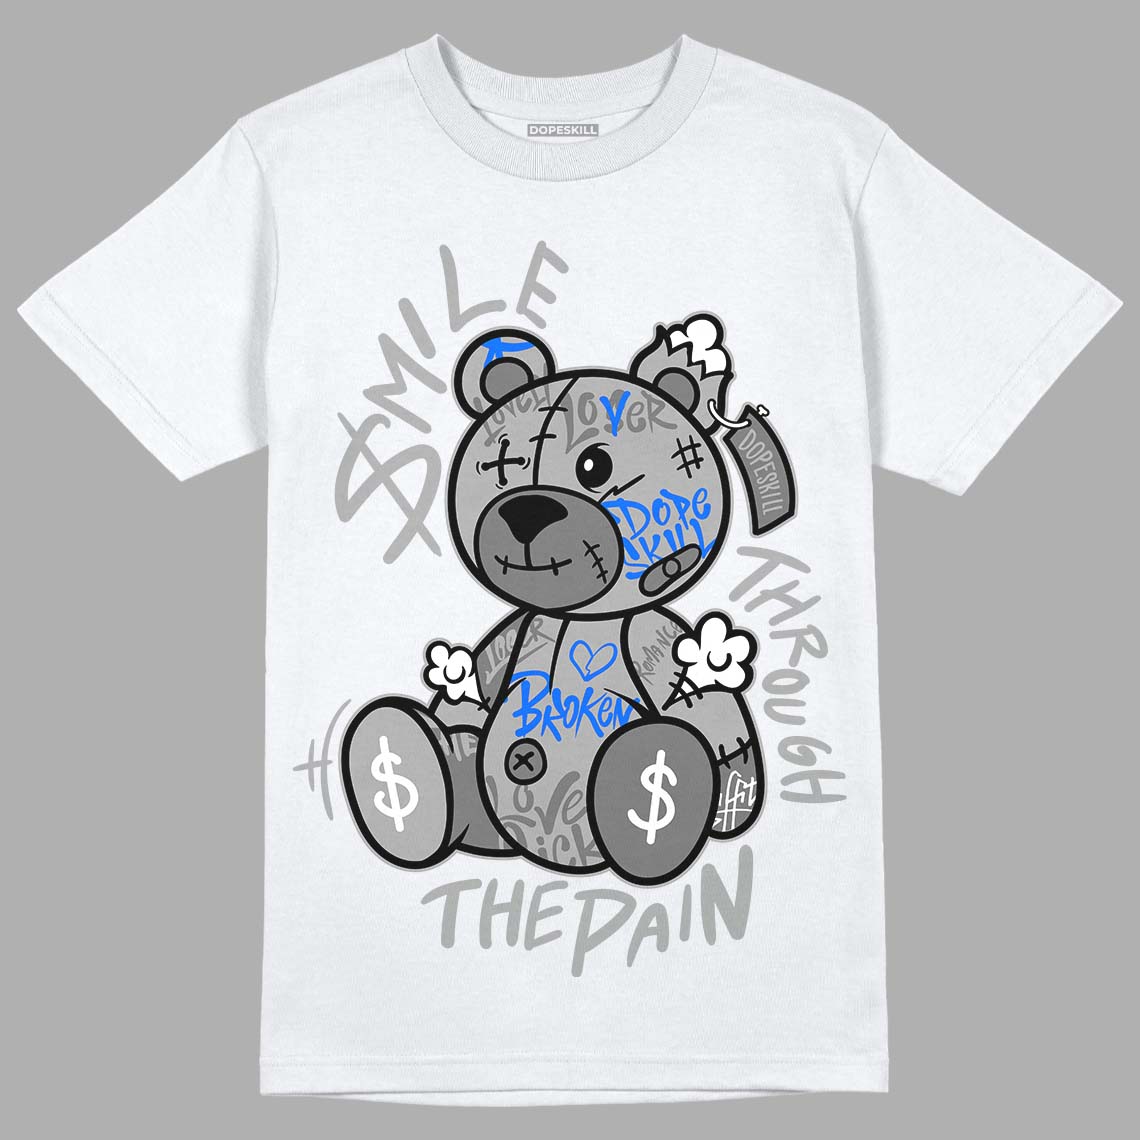 Jordan 12 Stealth DopeSkill T-Shirt Smile Through The Pain Graphic Streetwear